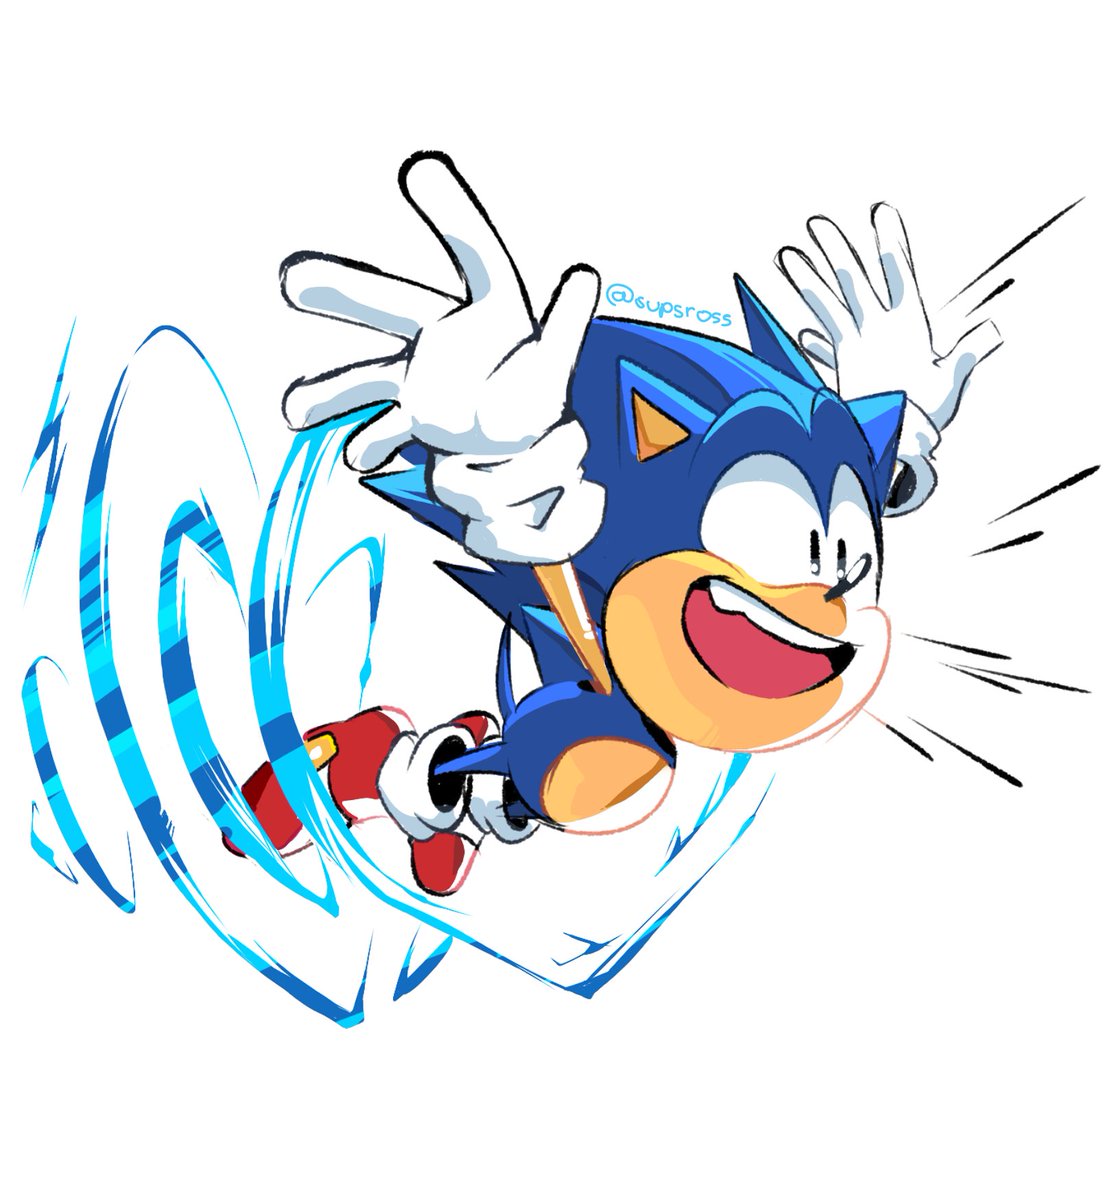 Home sonic. Sonic Homing Attack. Паническая атака Соника. Иконка Homing Attack Sonic. Homing target Sonic.